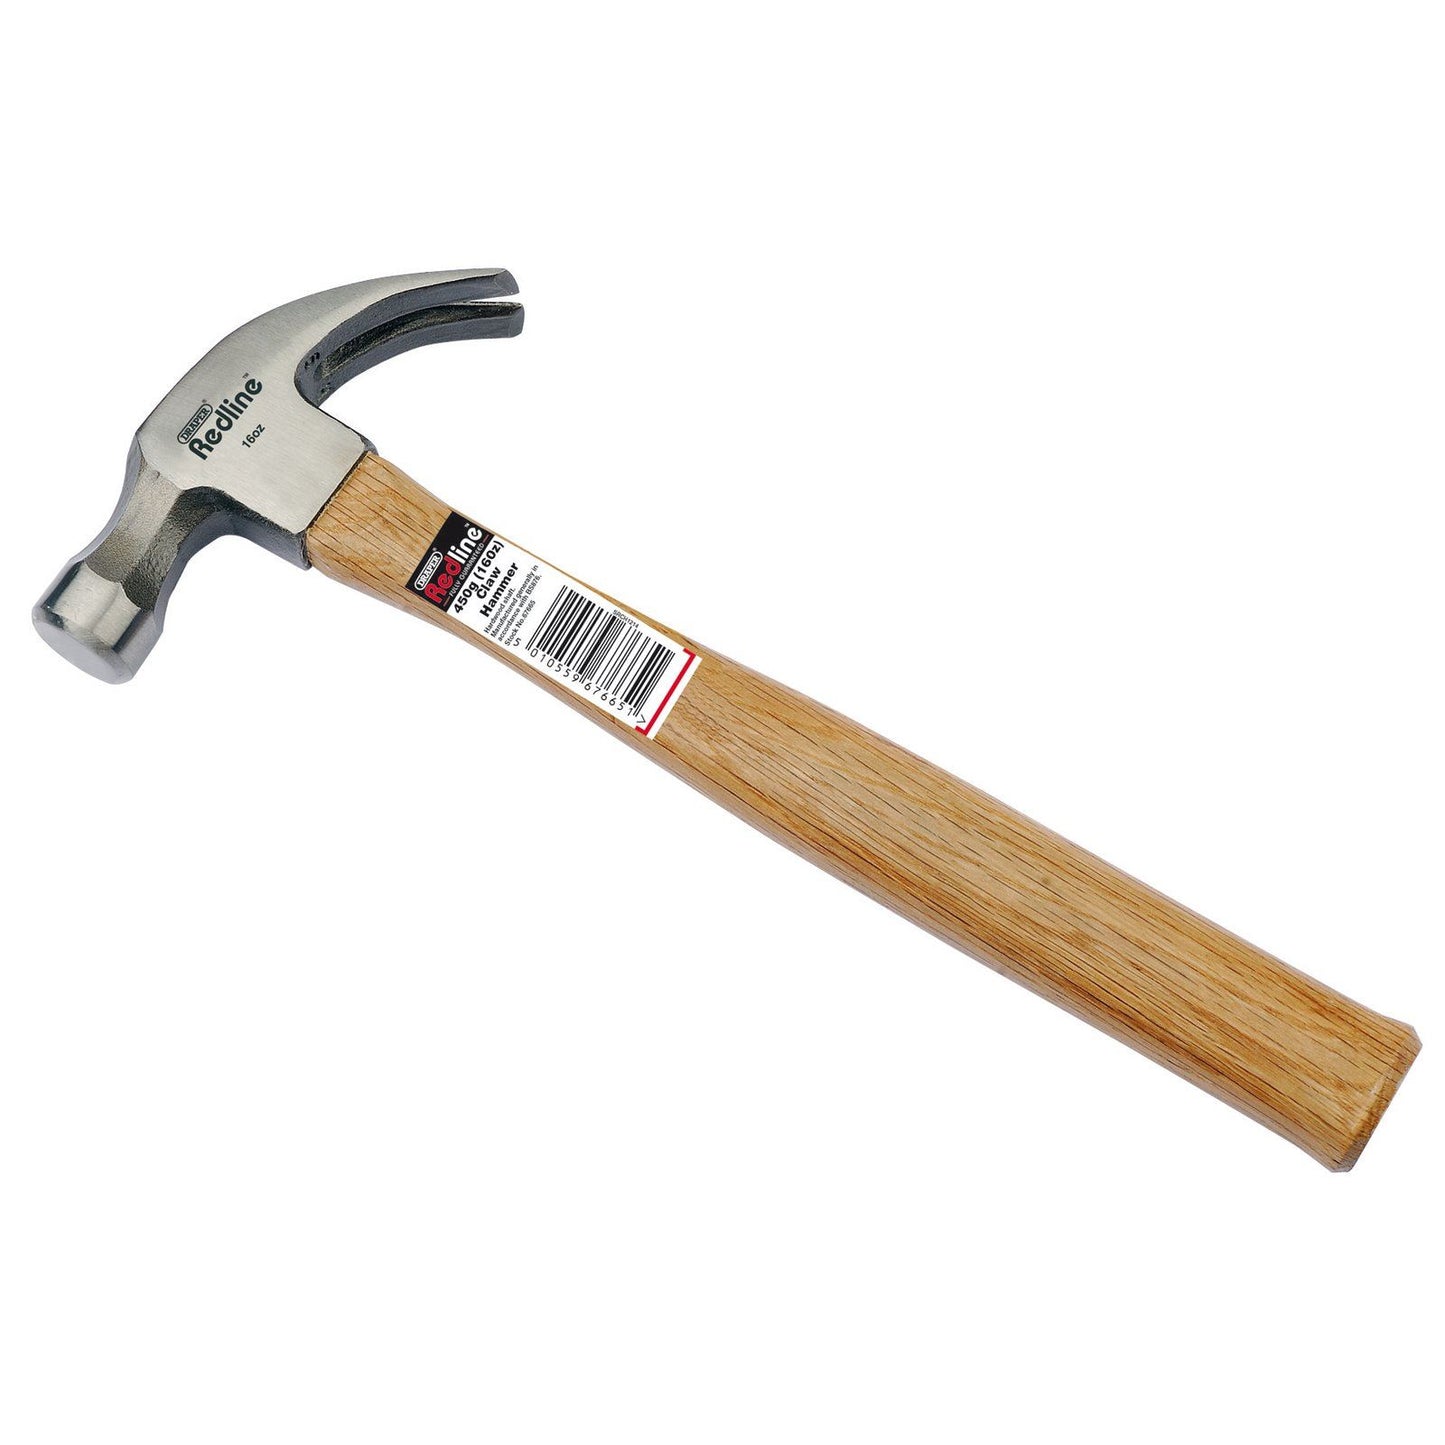 Draper Redline 67665 450 g Claw Hammer with Hardwood Shaft